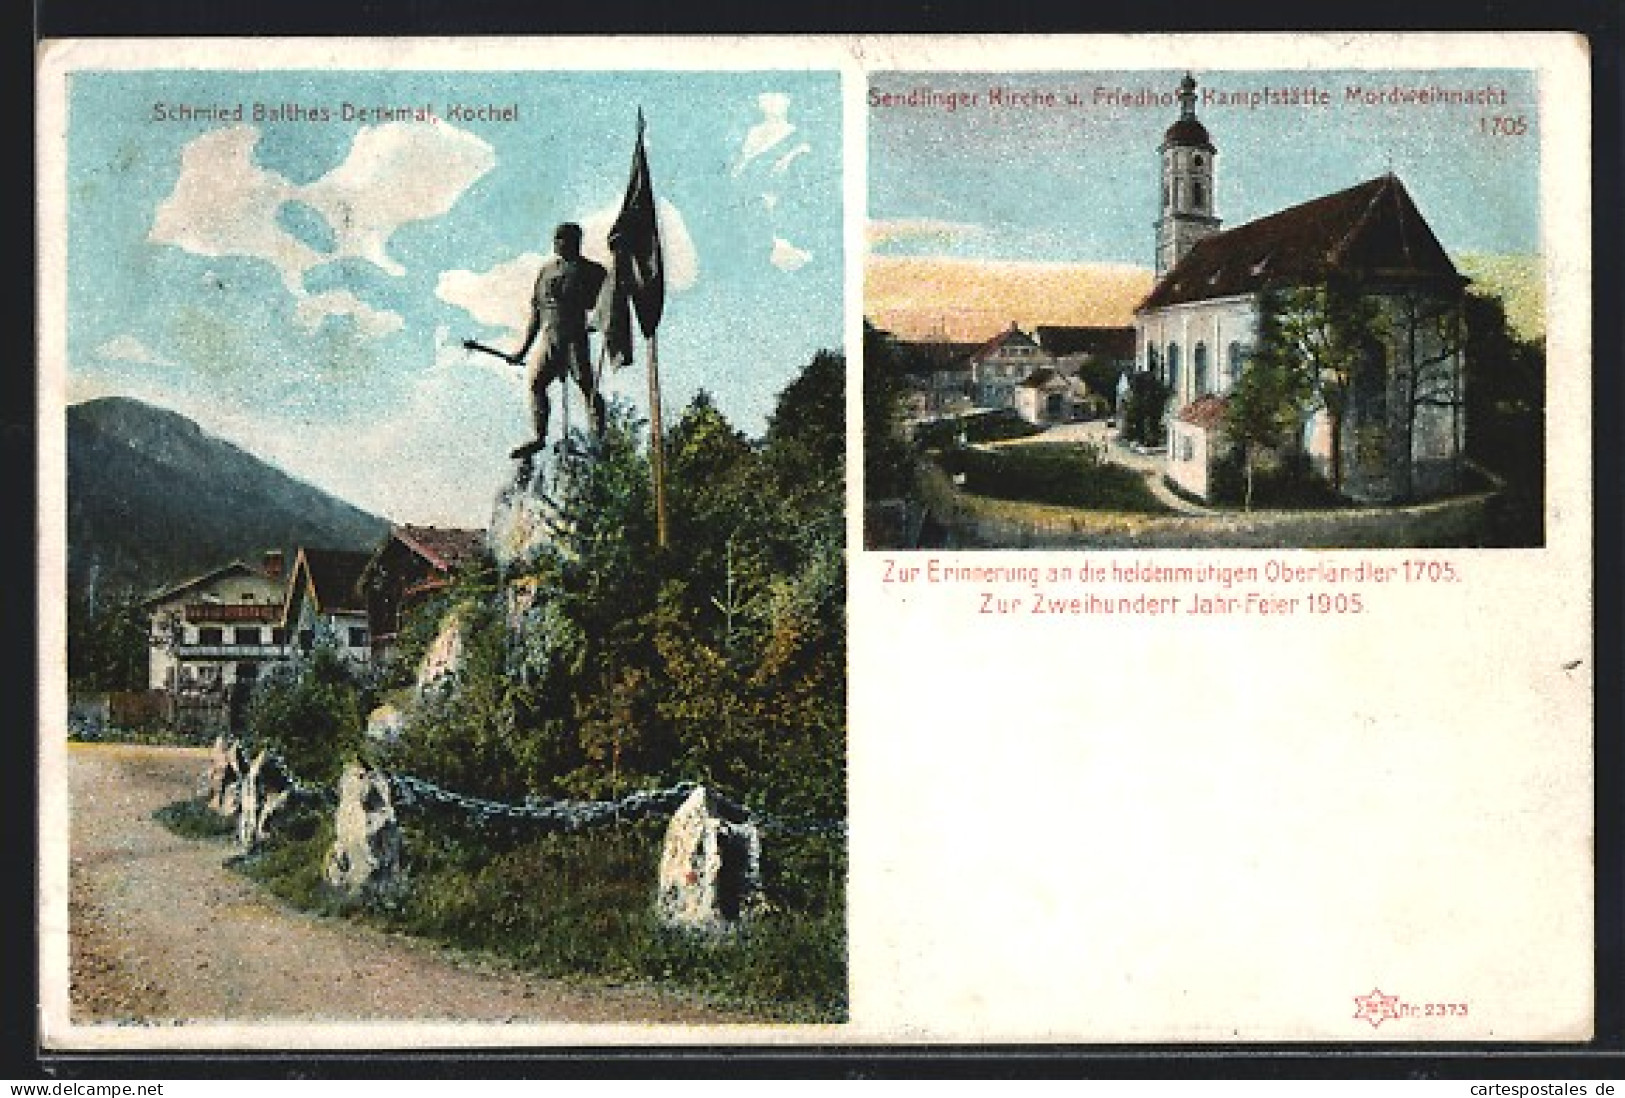 AK München-Sendling, Zweihunder Jahrfeier 1905, Schmied Balthes-Denkmal Am Kochel, Sendlinger Kirche  - Muenchen